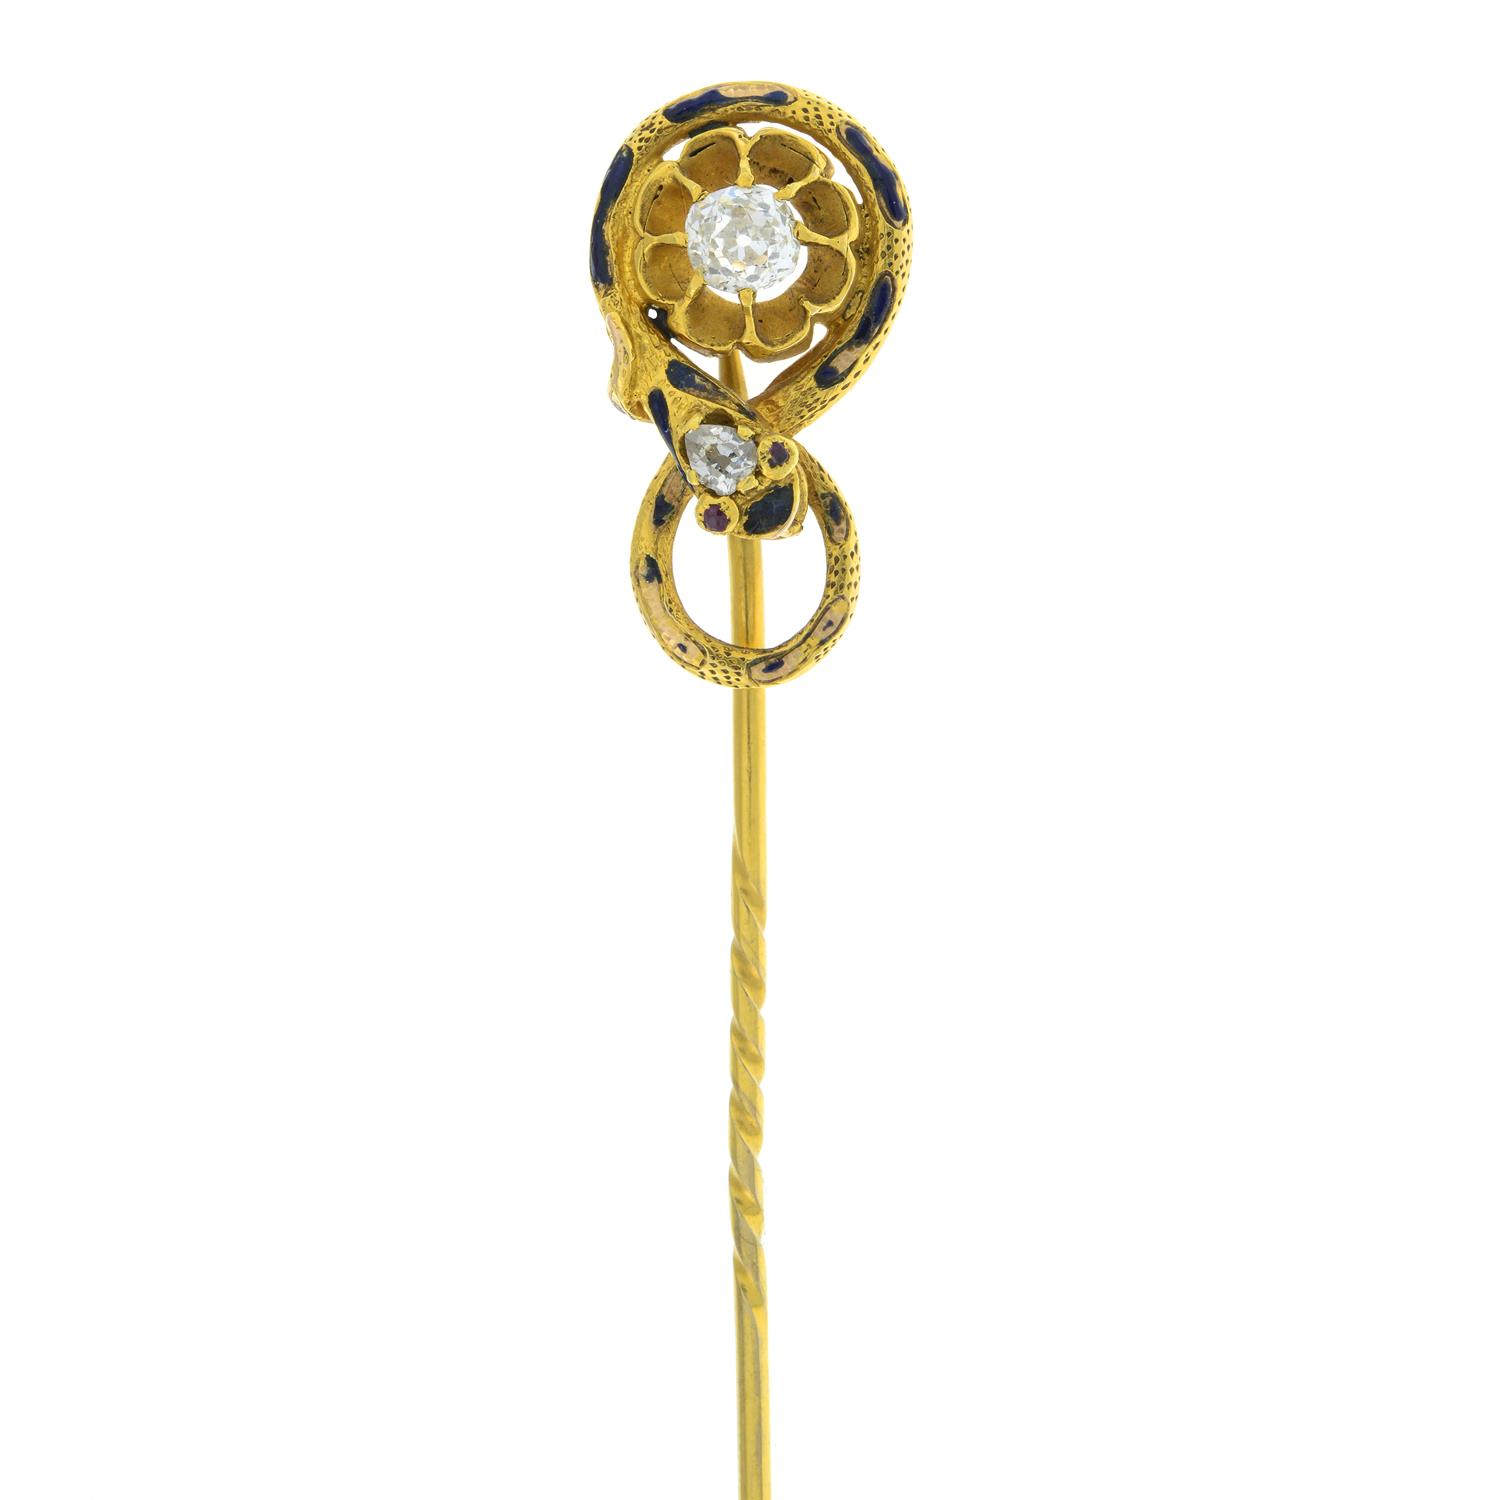 19th century gold diamond and enamel snake stickpin - Image 2 of 5